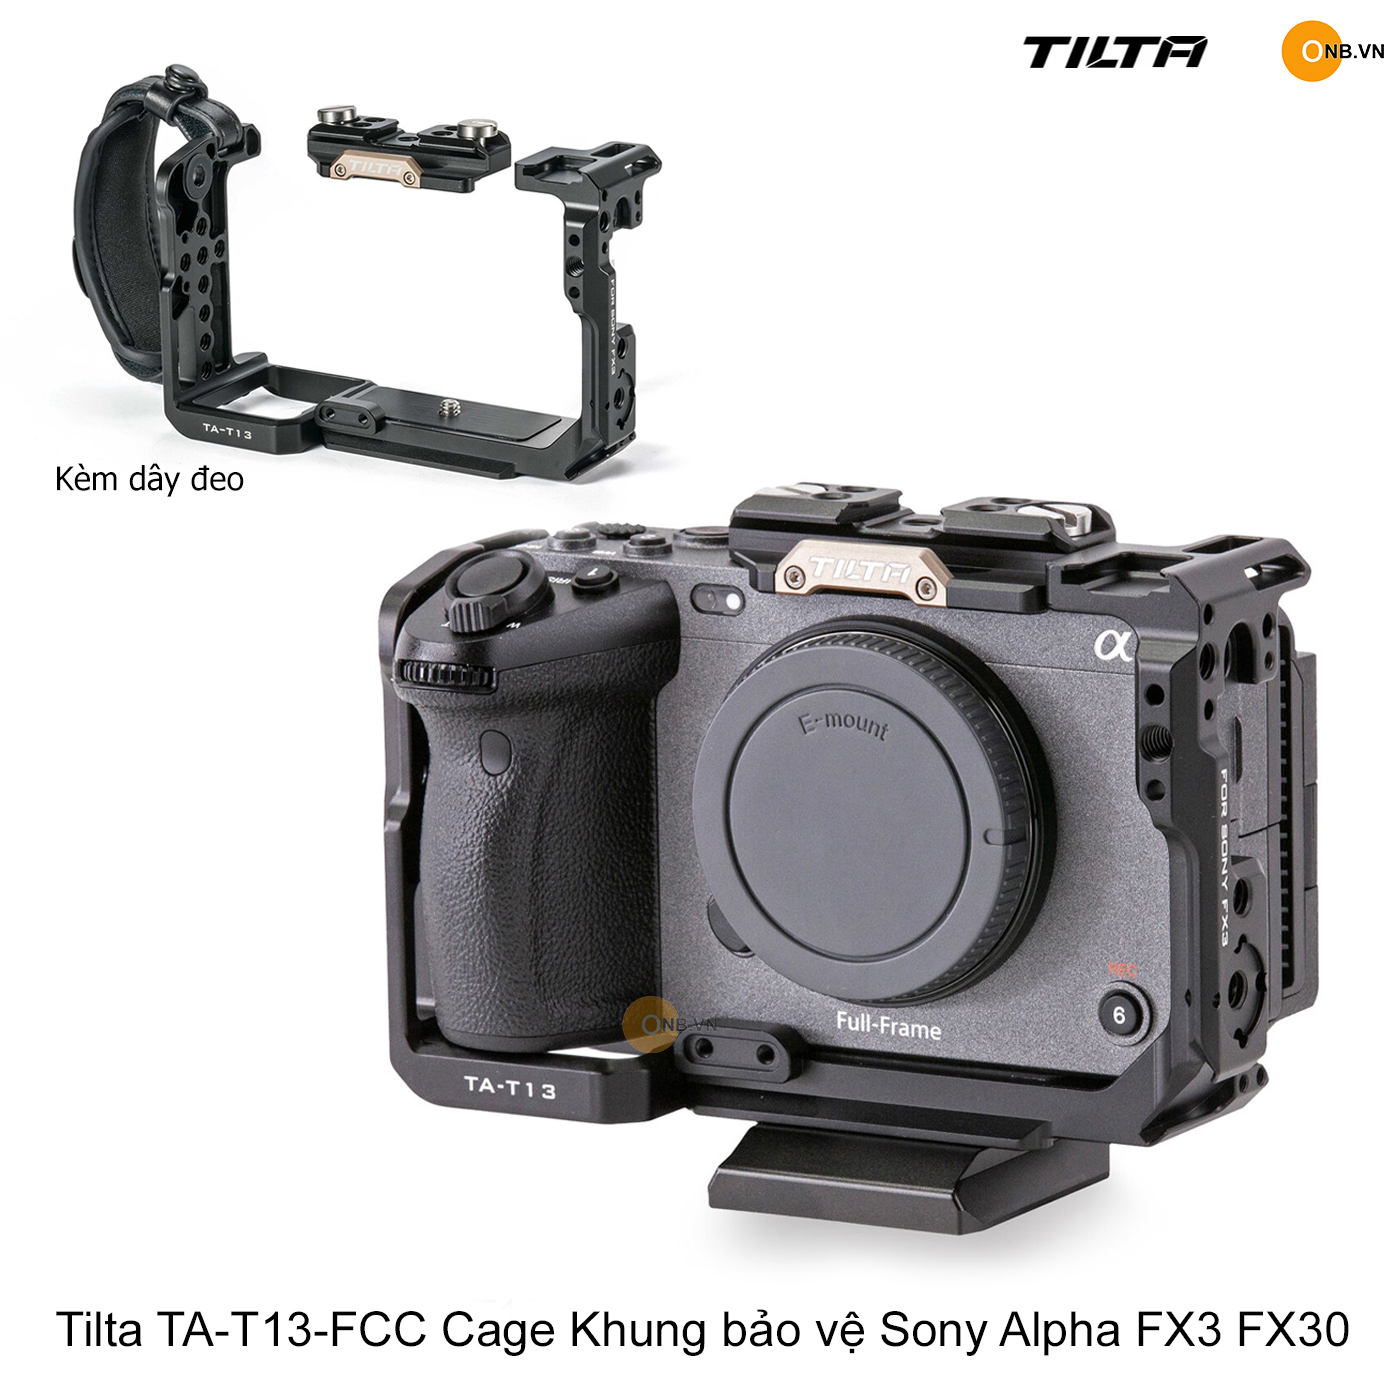 Tilta Cage So-ny Alpha FX3 FX30 code TA-T13-FCC